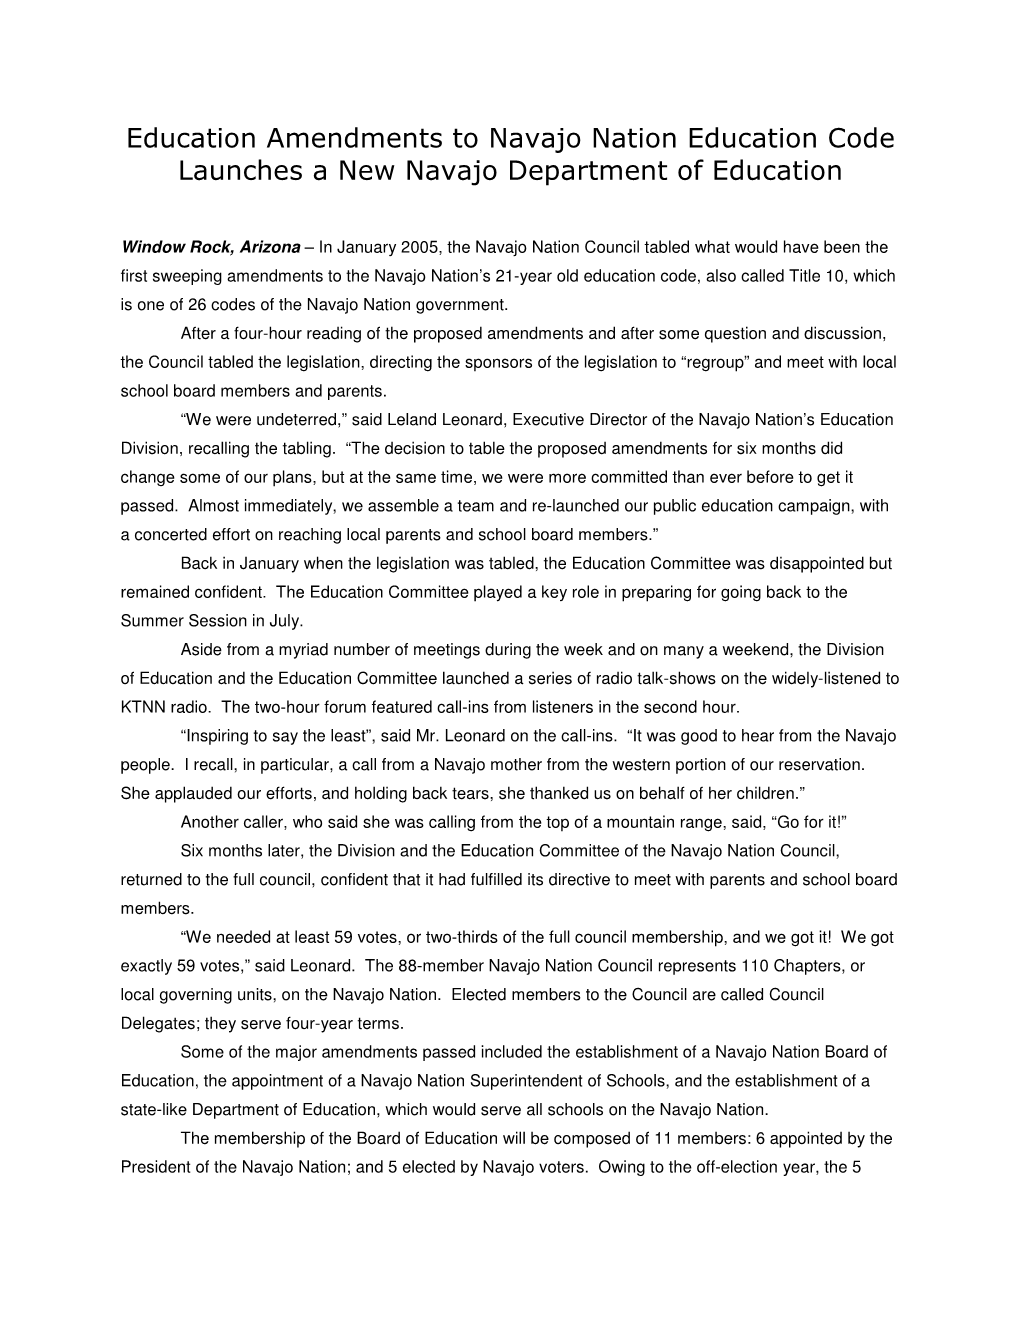 Education Amendments to Navajo Nation Education Code Launches a New Navajo Department of Education